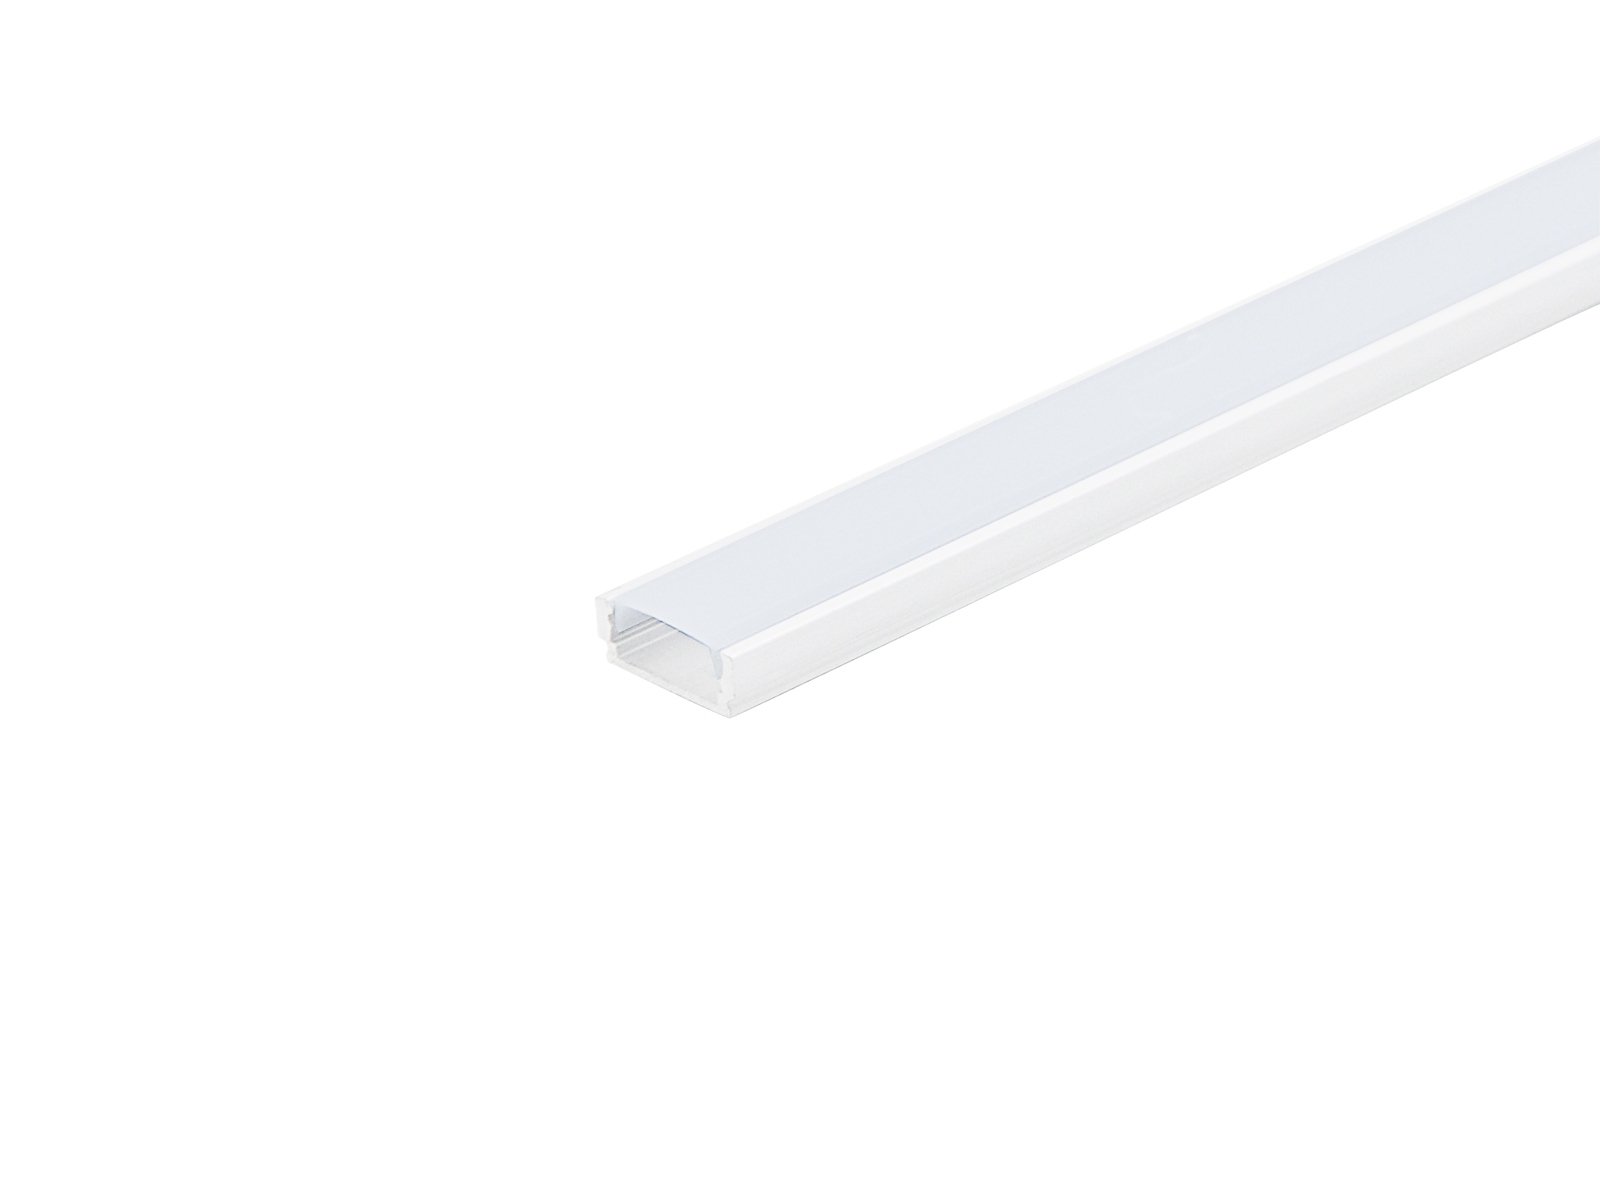 LED Alu U-Profil AL-PU1 6mm weiß mit Abdeckung 2m kaufen | PUR-LED